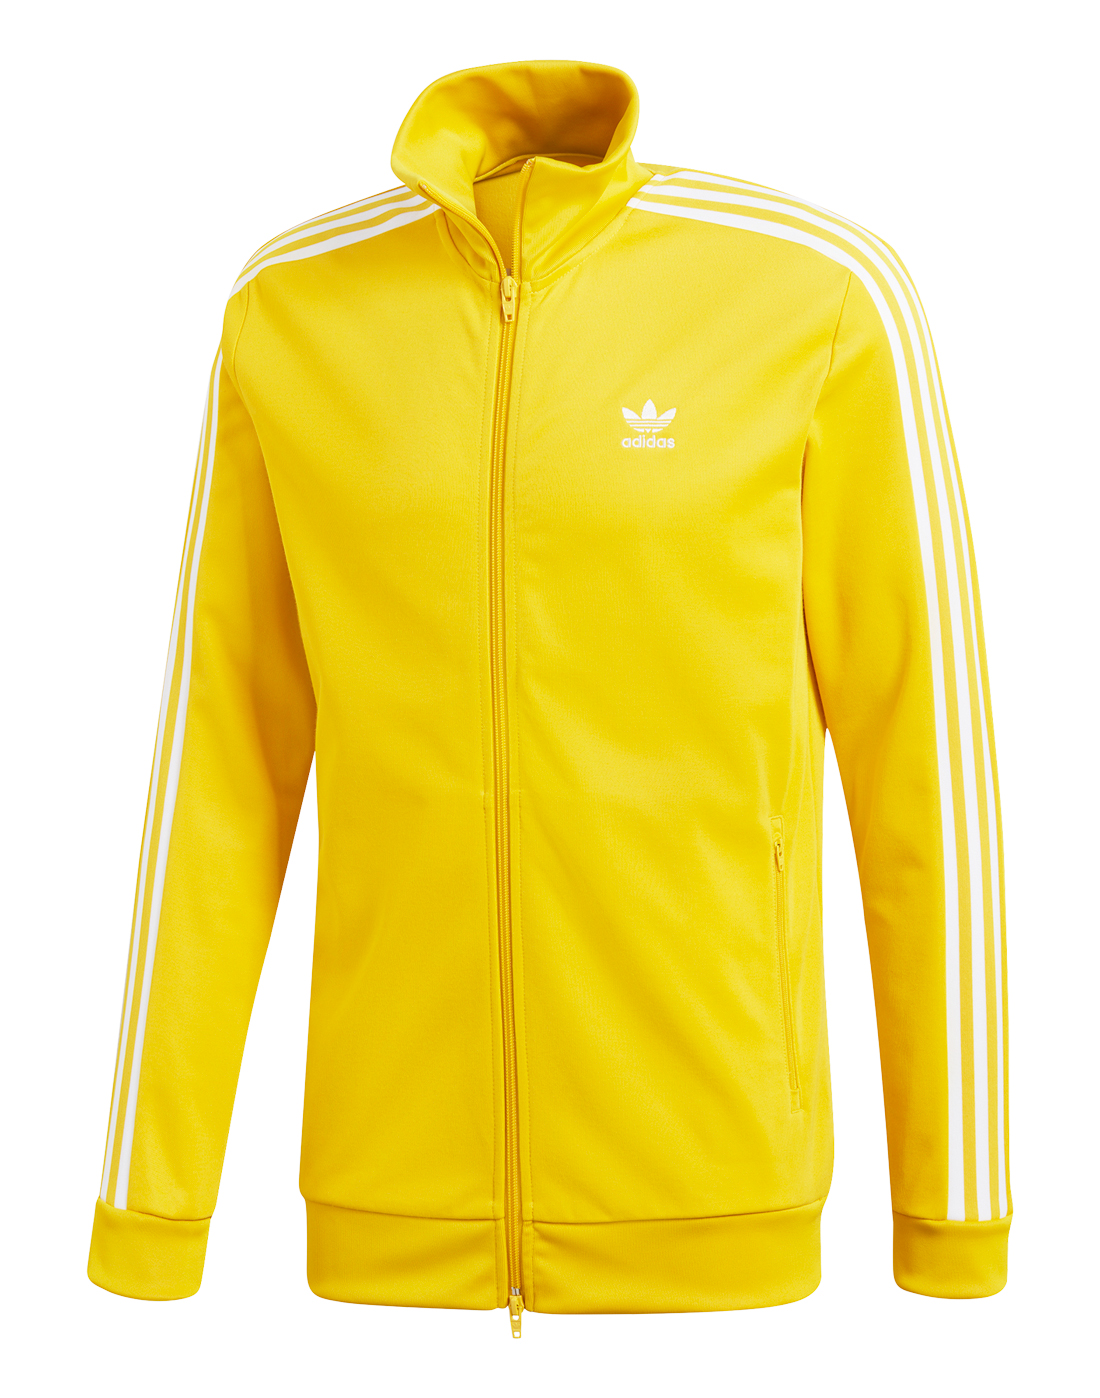 adidas beckenbauer track top yellow